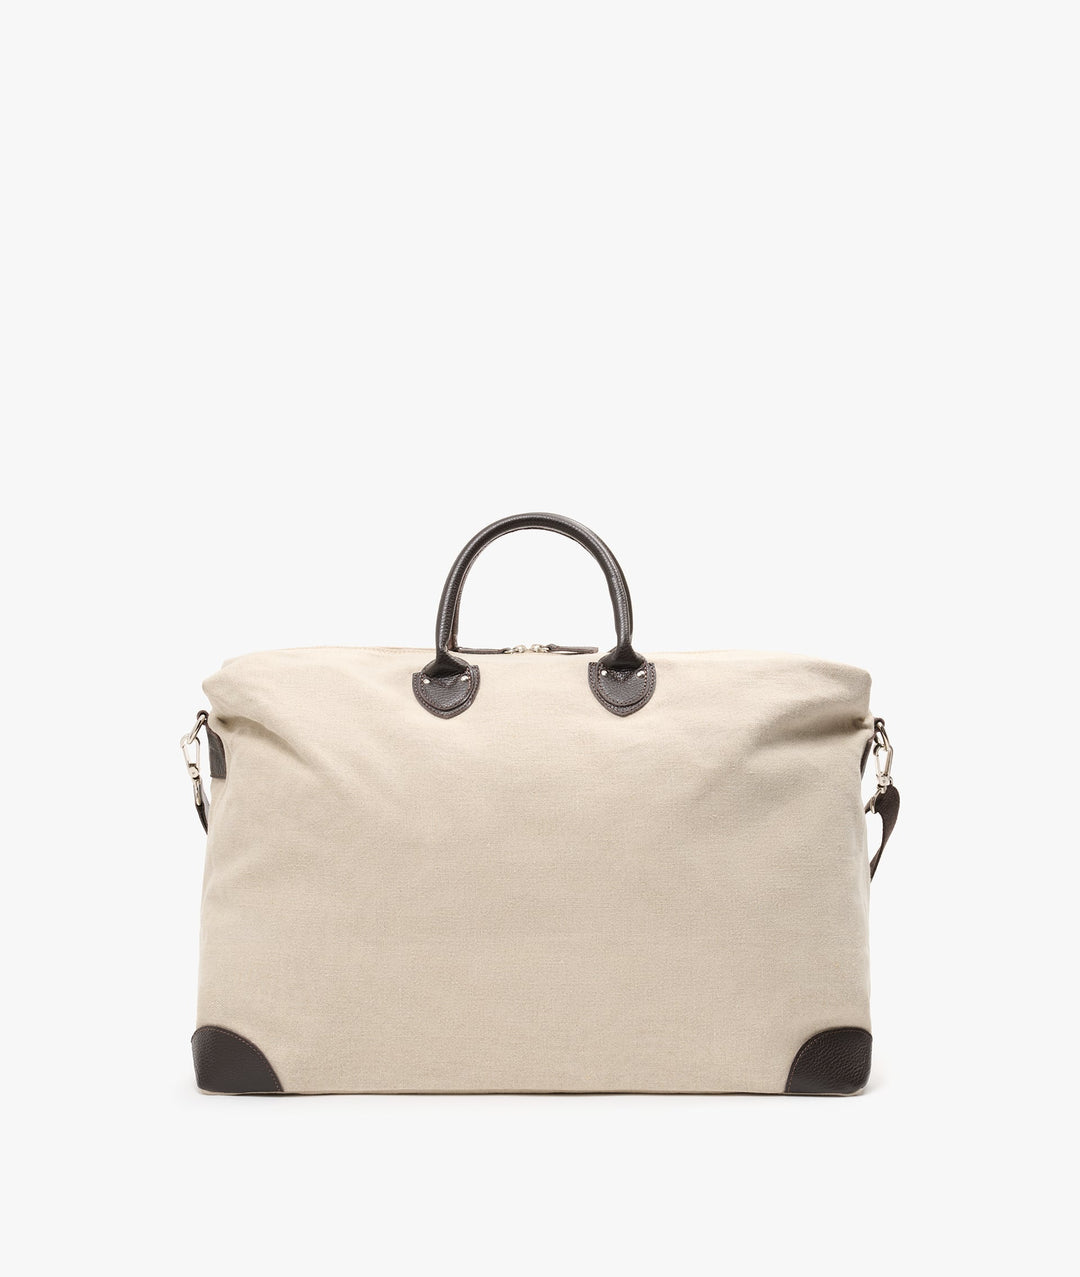 MyStyleBags Travel Bags My Style Bags Harvard Duffel Large Travel Bag Natural Brand